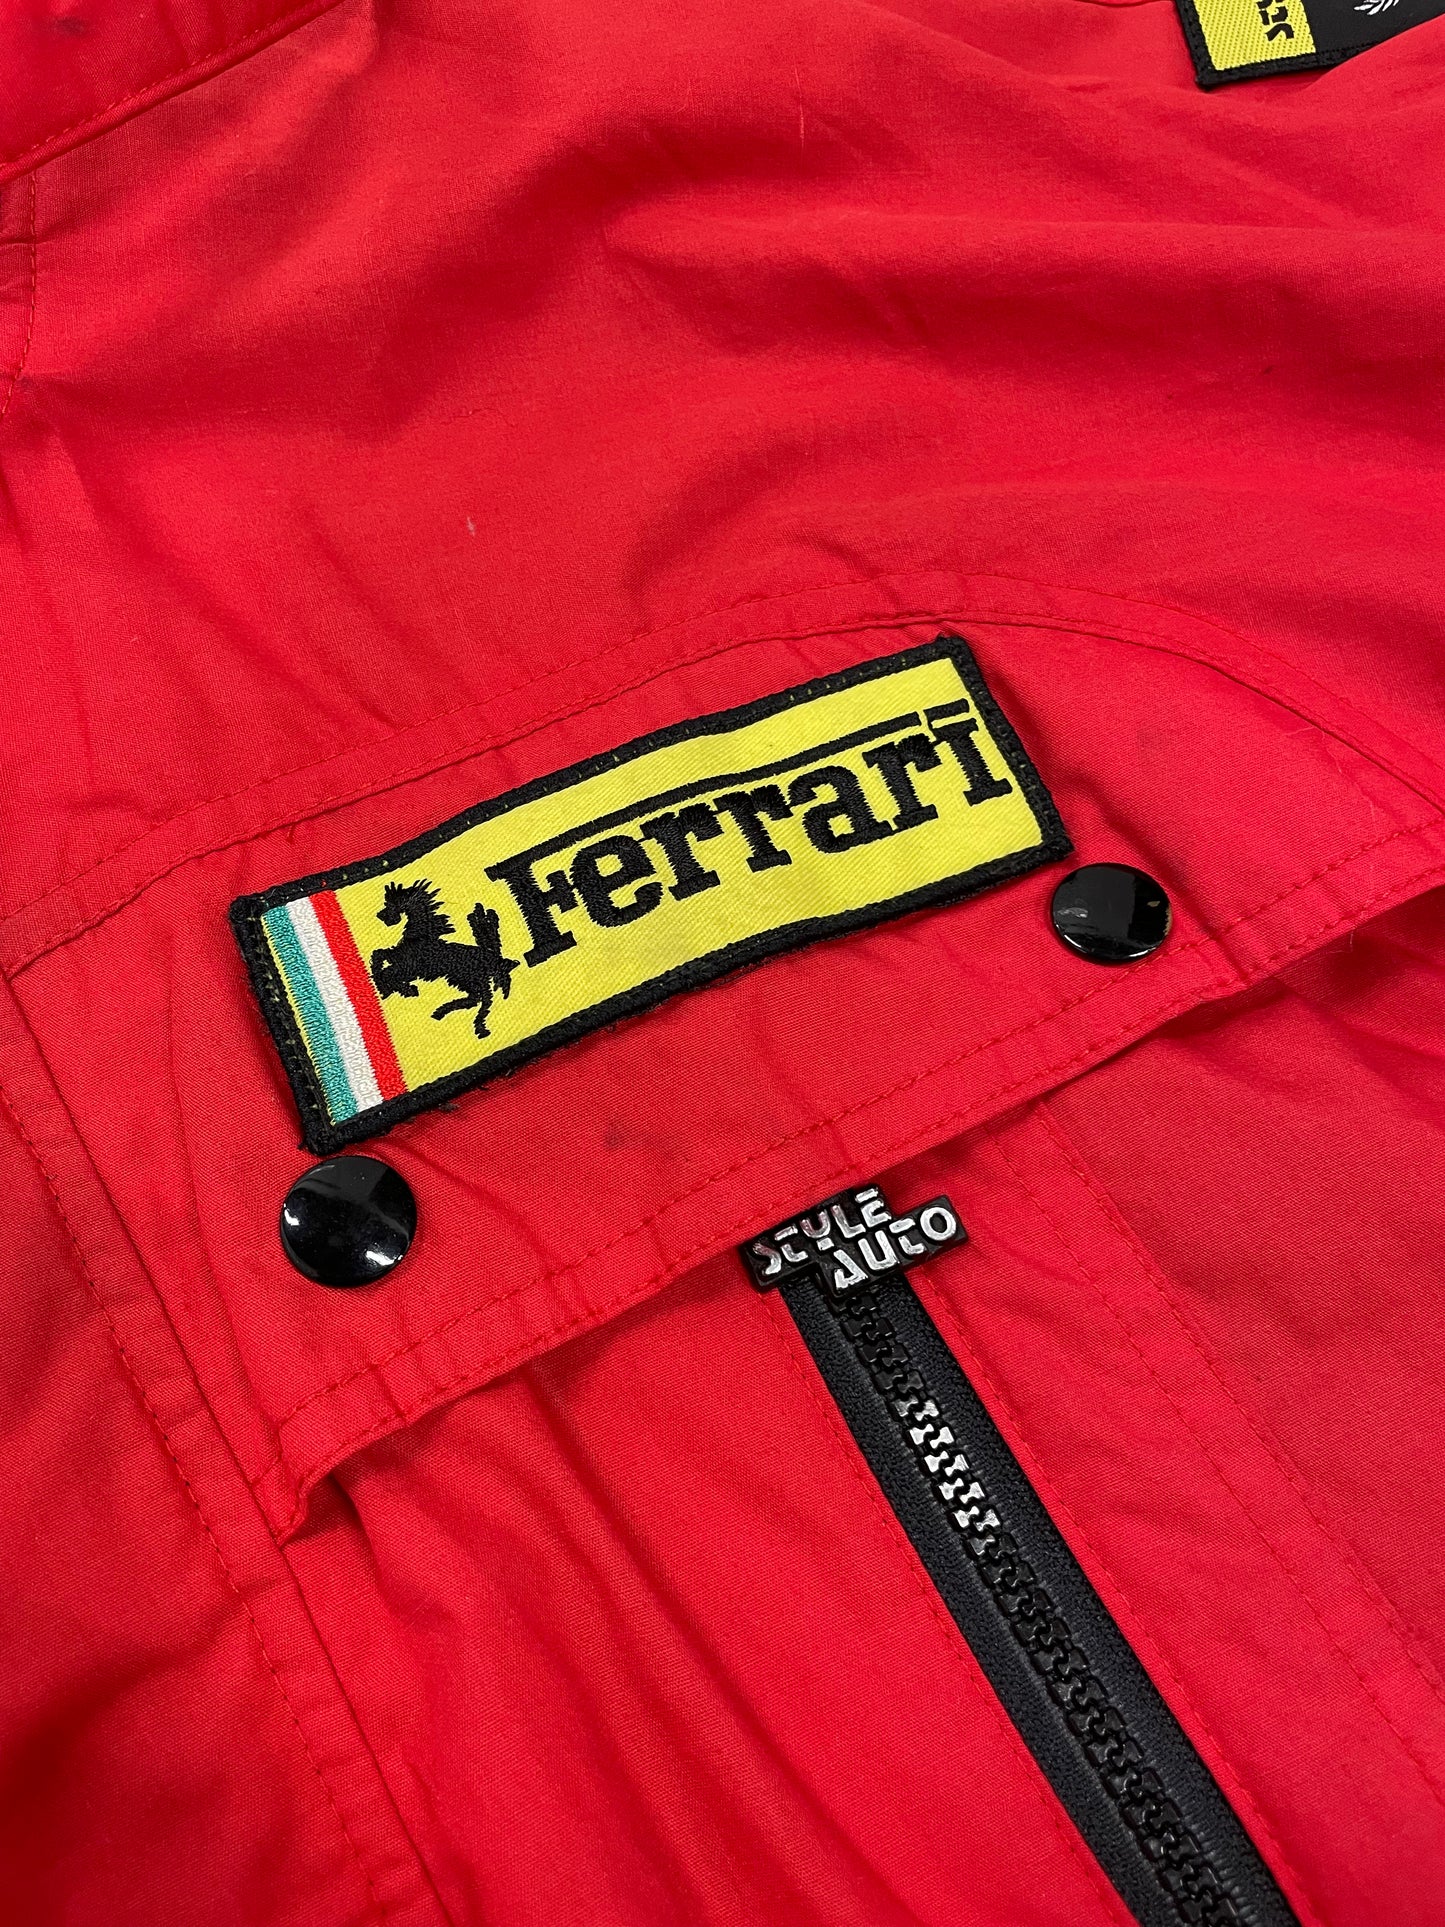 Vintage Ferrari Style Auto Jacket